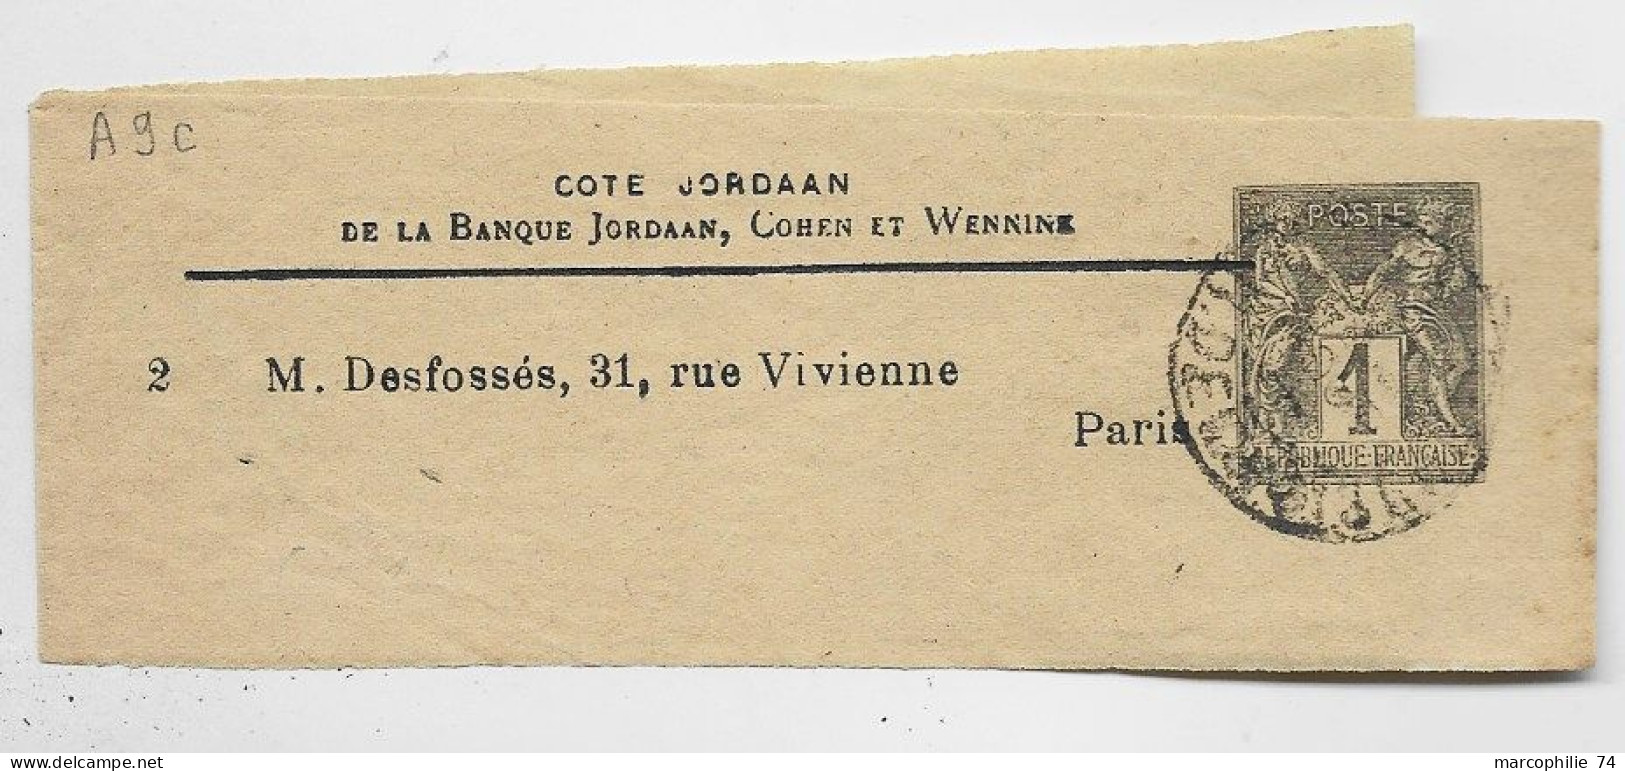 SAGE ENTIER 1C BANDE COMPLETE TIMBRE SUR COMMANDE COTE JORDAAN BANQUE JORDAAN COHEN WENNINE PARIS - Newspaper Bands